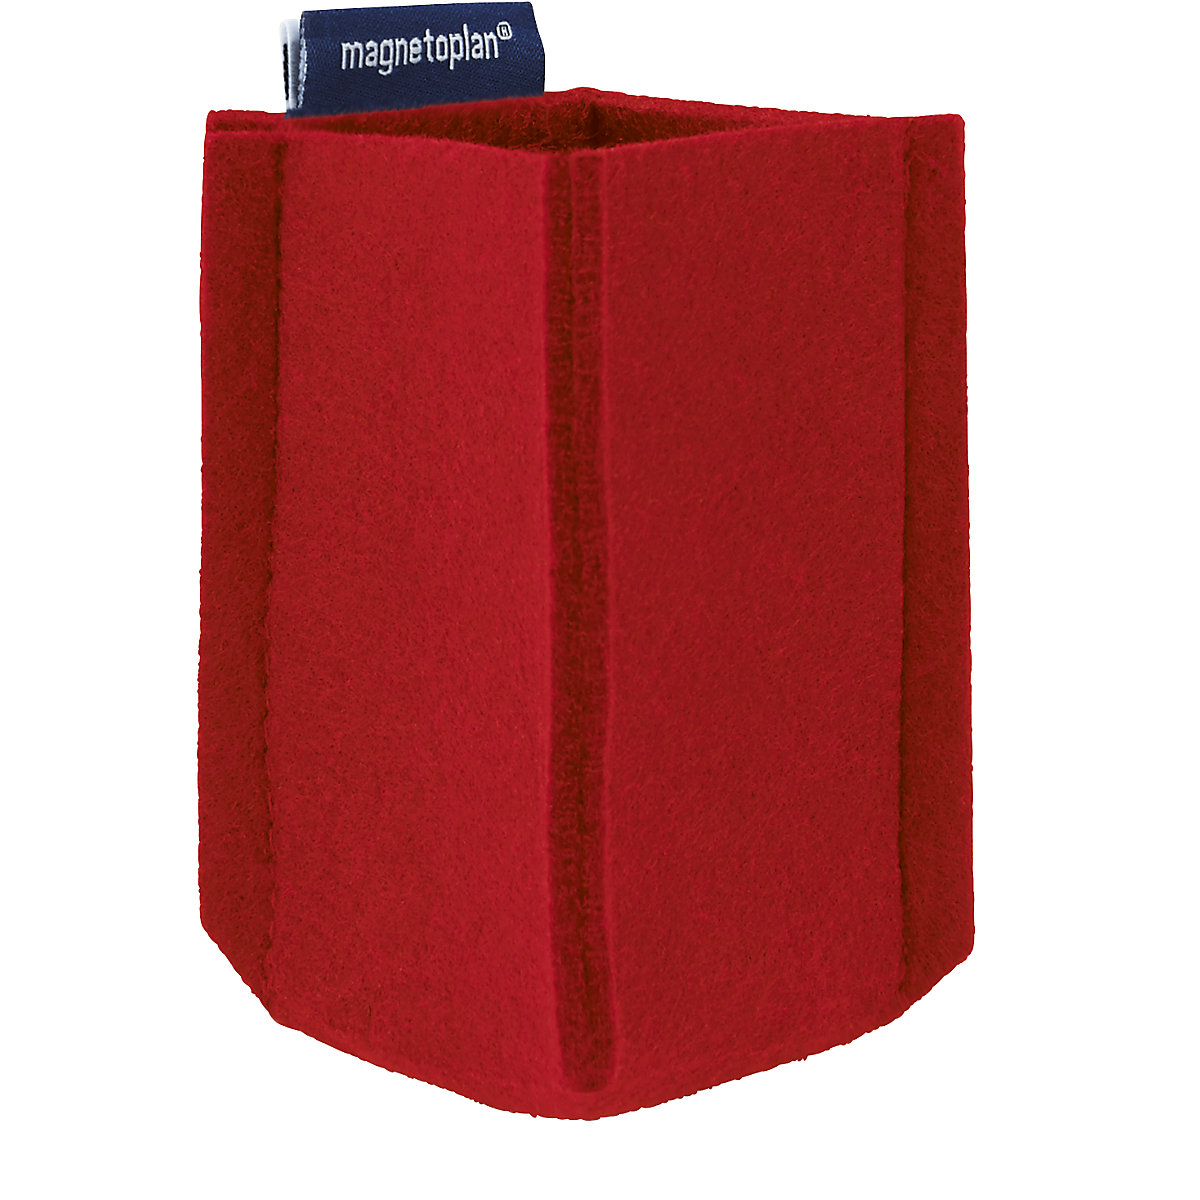 Pennenbak magnetoTray – magnetoplan, SMALL, h x b x d = 100 x 60 x 60 mm, rood-5